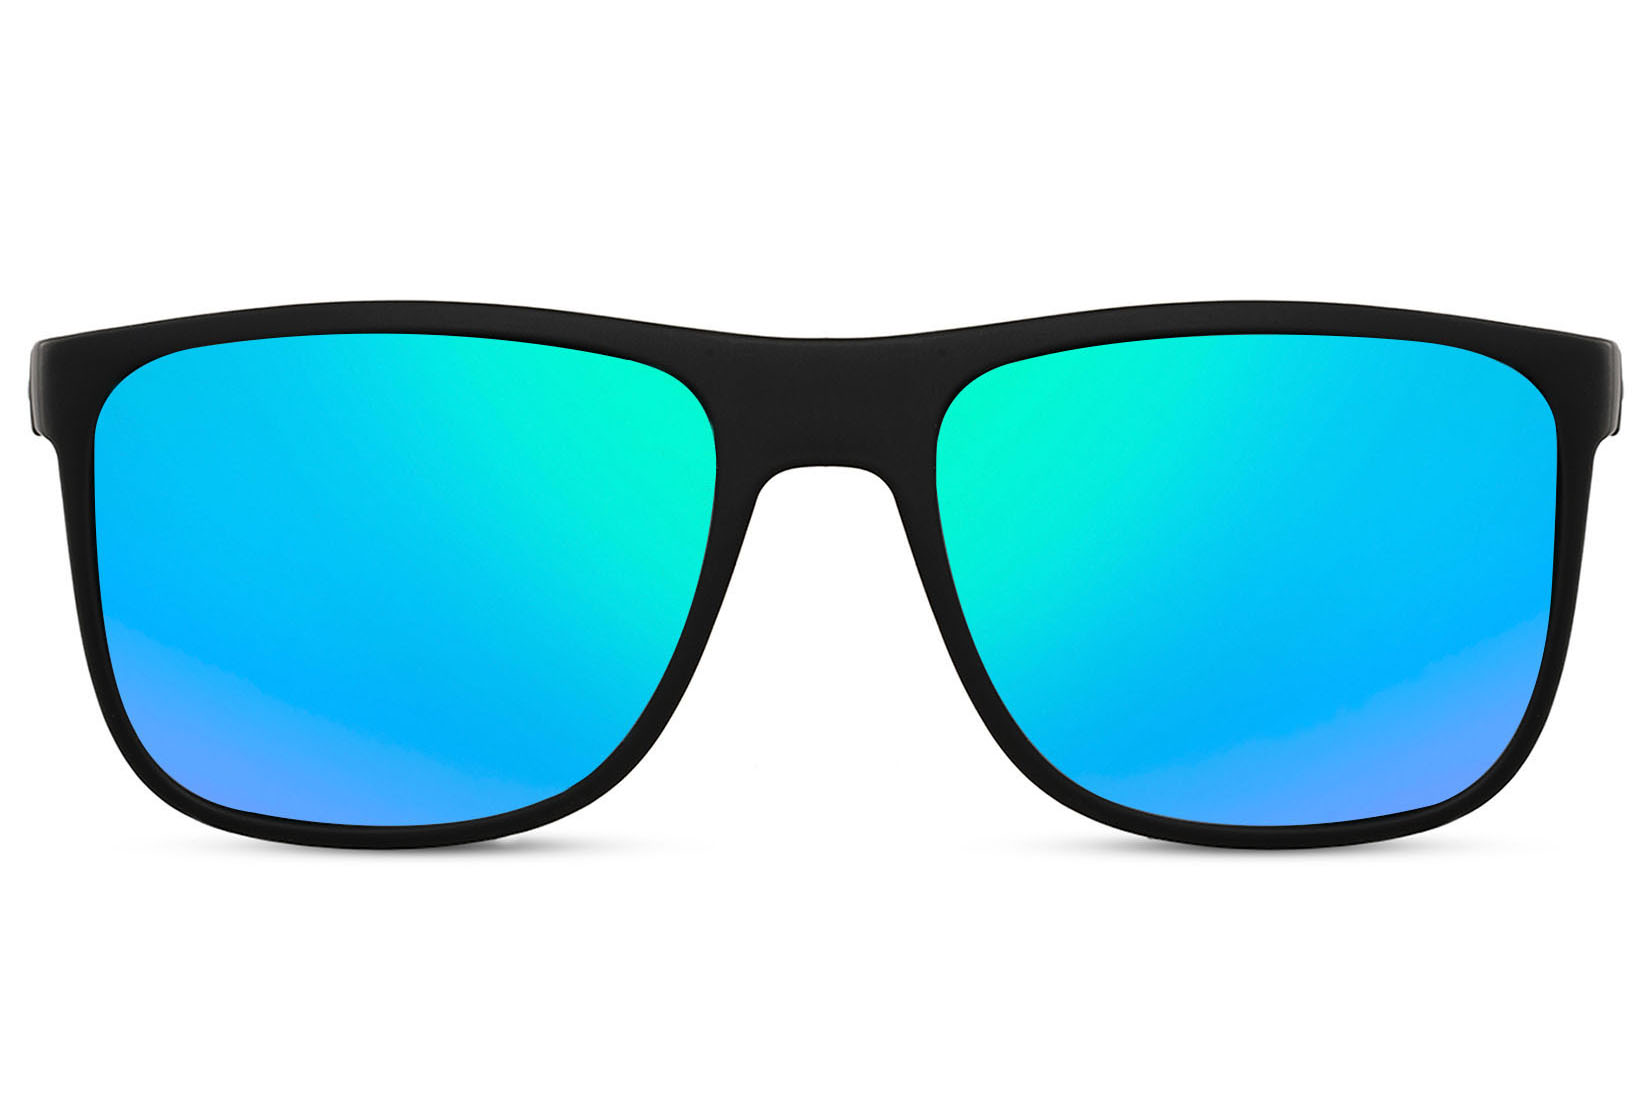 Top G Sunglasses™ - Buy 1 Get 1 50% Off - AdollaShop